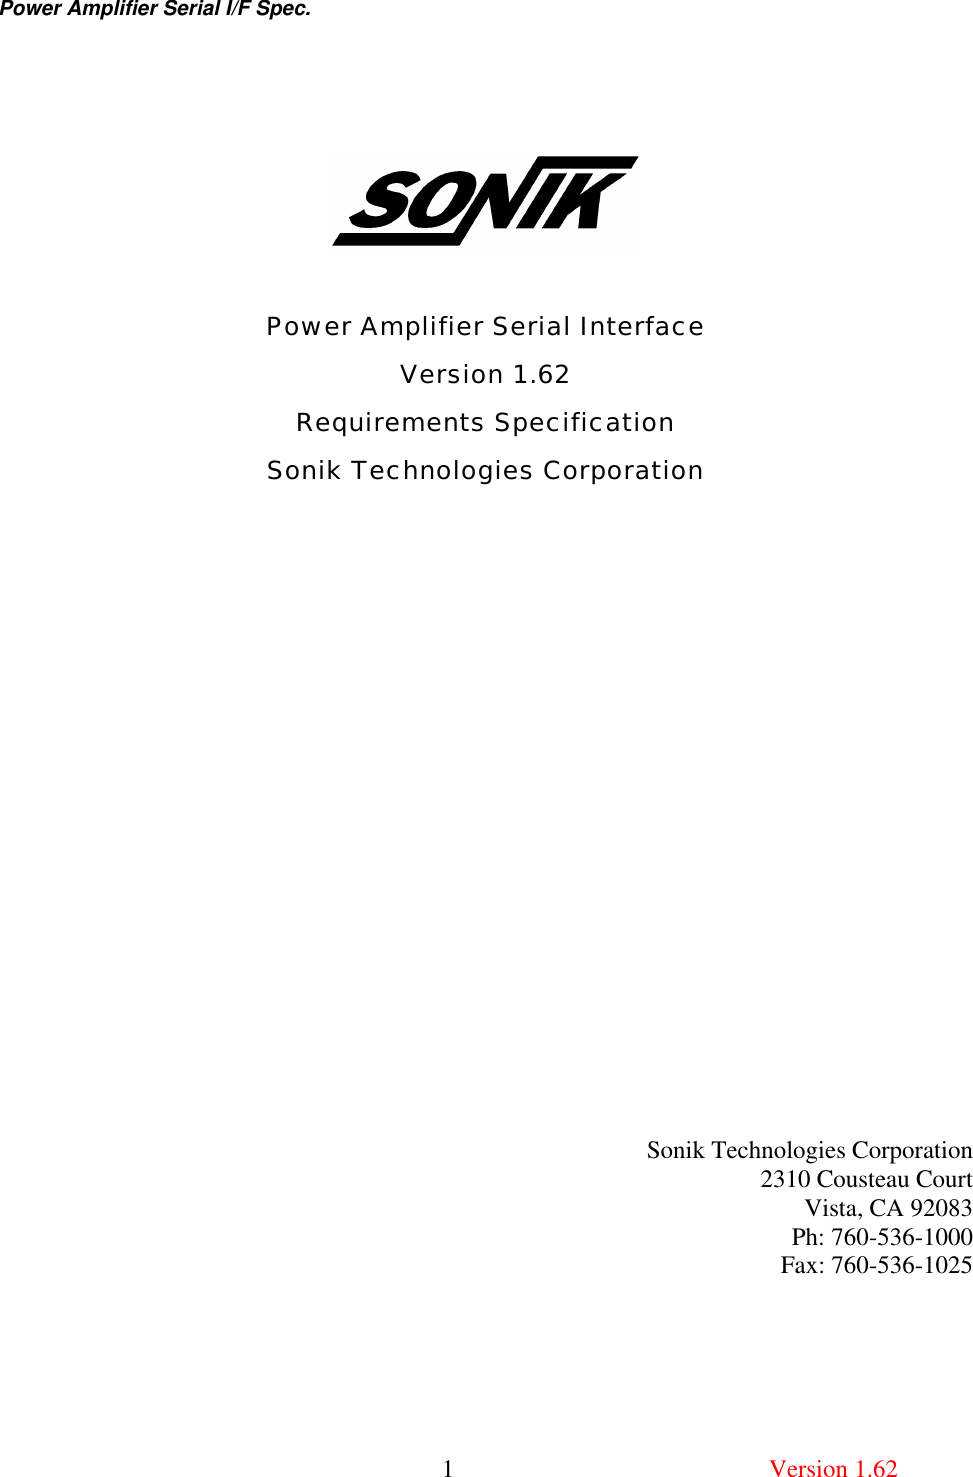 Power Amplifier Serial I/F Spec.       1  Version 1.62      Power Amplifier Serial Interface Version 1.62 Requirements Specification Sonik Technologies Corporation                 Sonik Technologies Corporation 2310 Cousteau Court Vista, CA 92083 Ph: 760-536-1000 Fax: 760-536-1025  